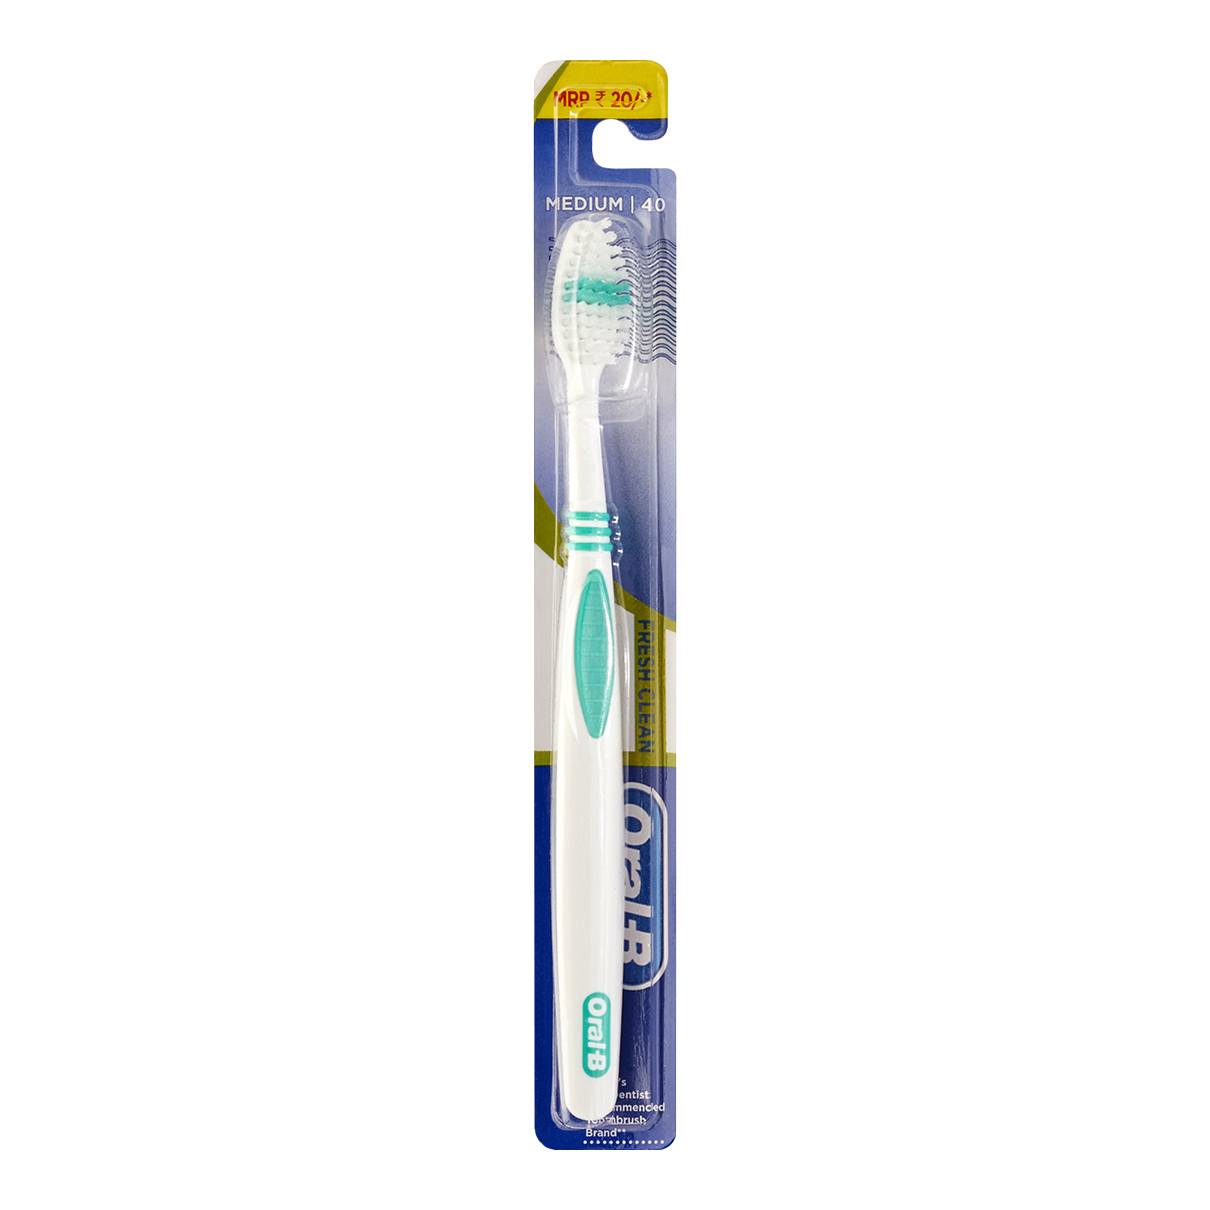 Oral B Fresh Clean Toothbrush